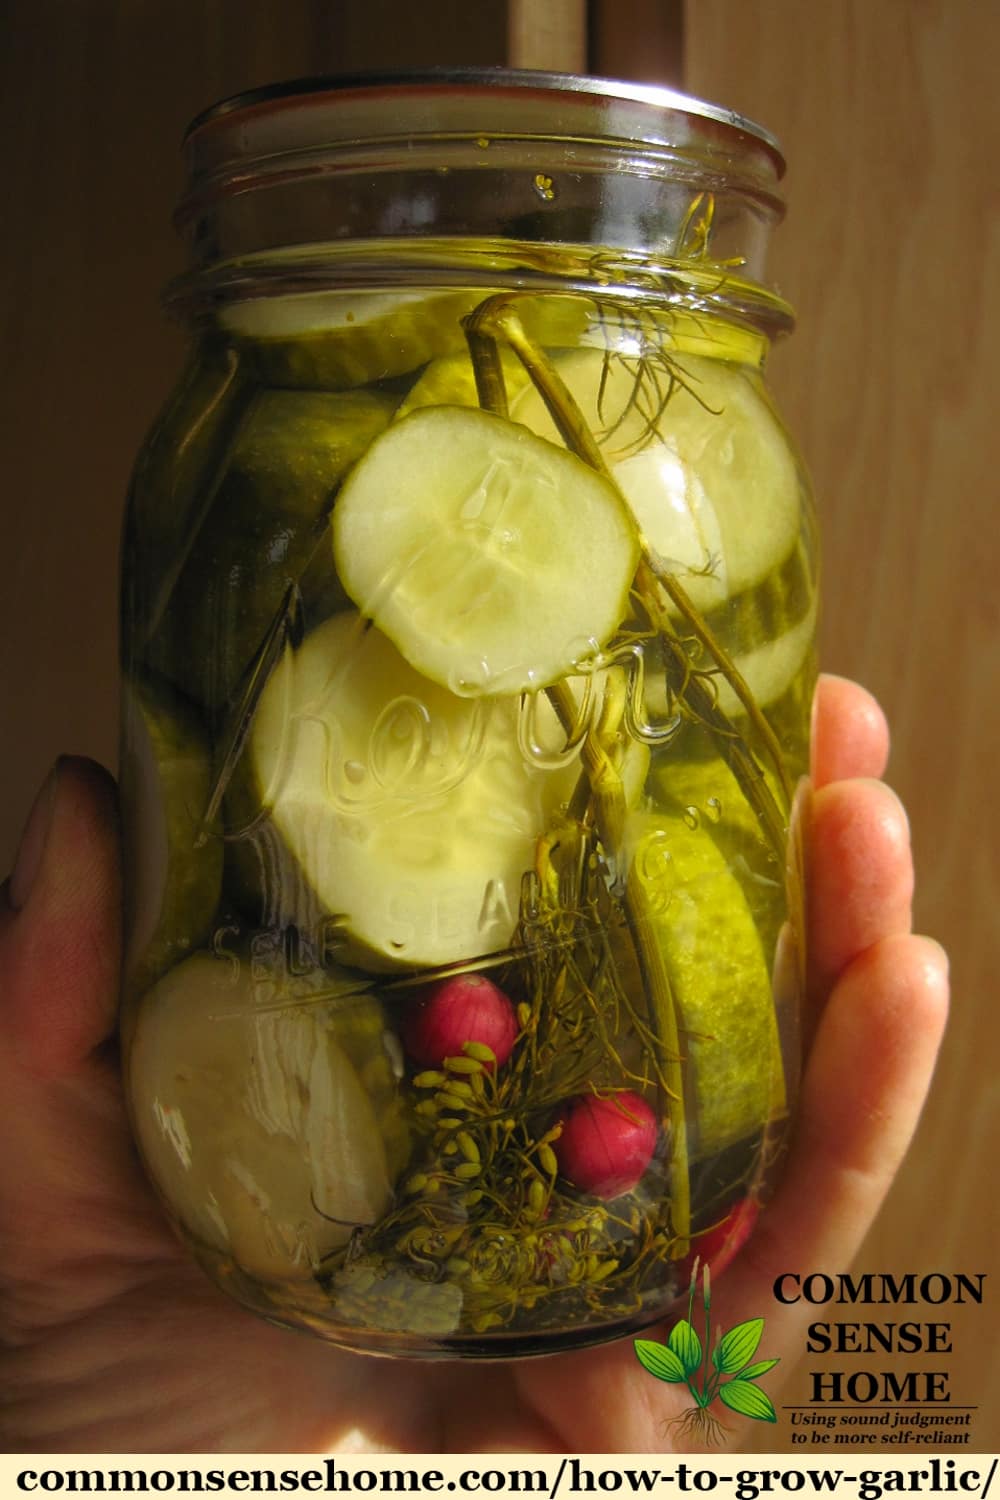 Garlic dill pickles